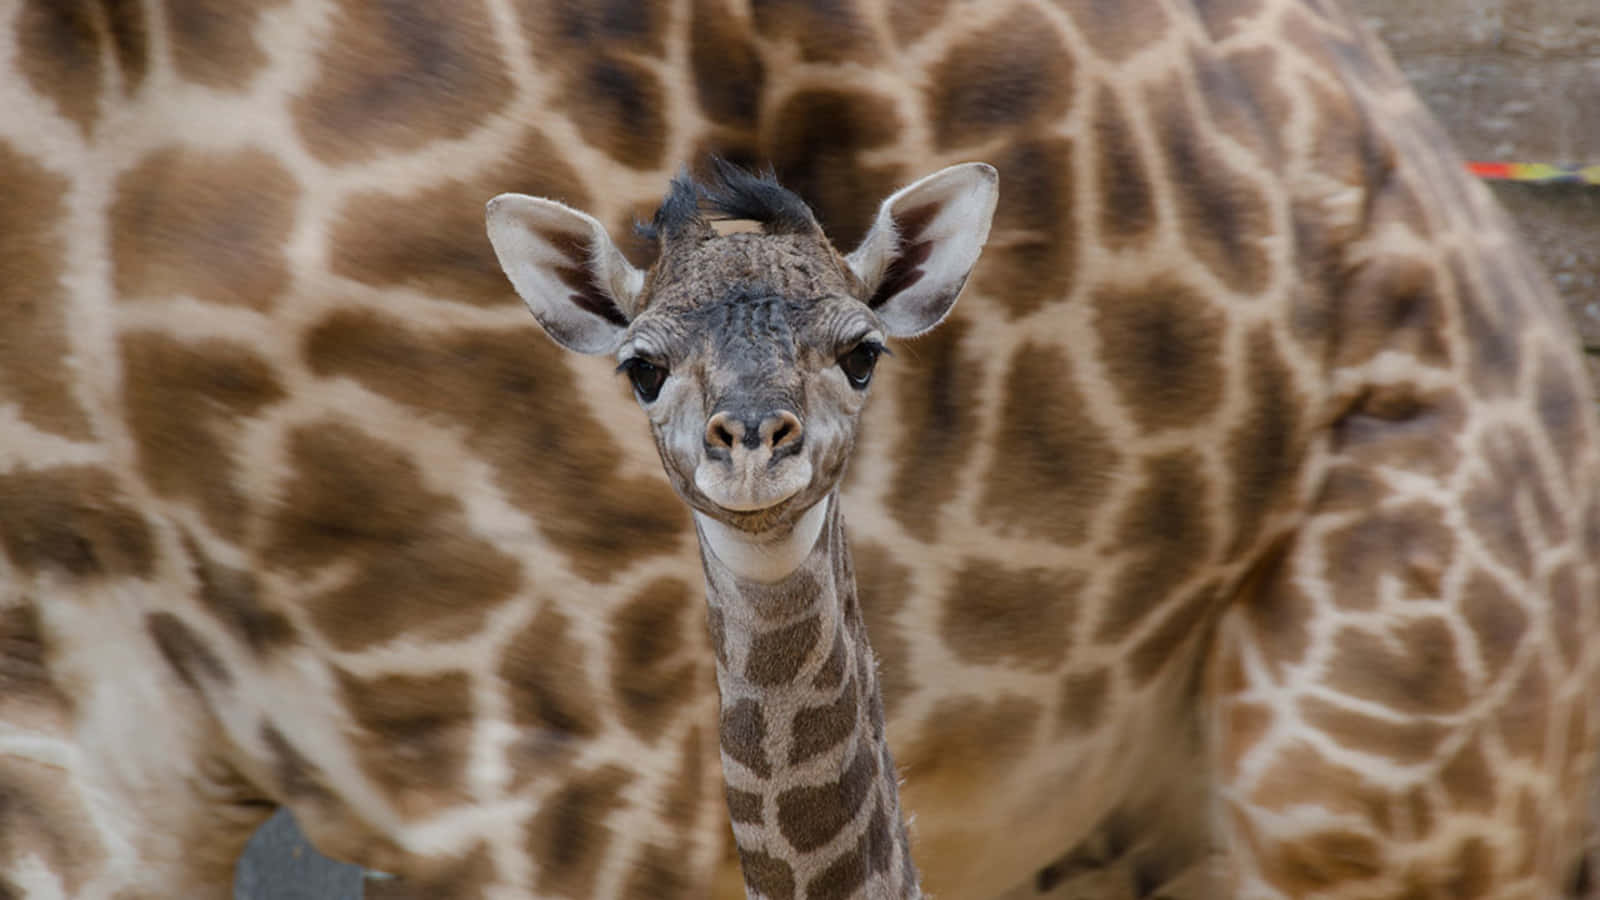 Ennysgerrig Baby Giraf Stirrer Intenst.